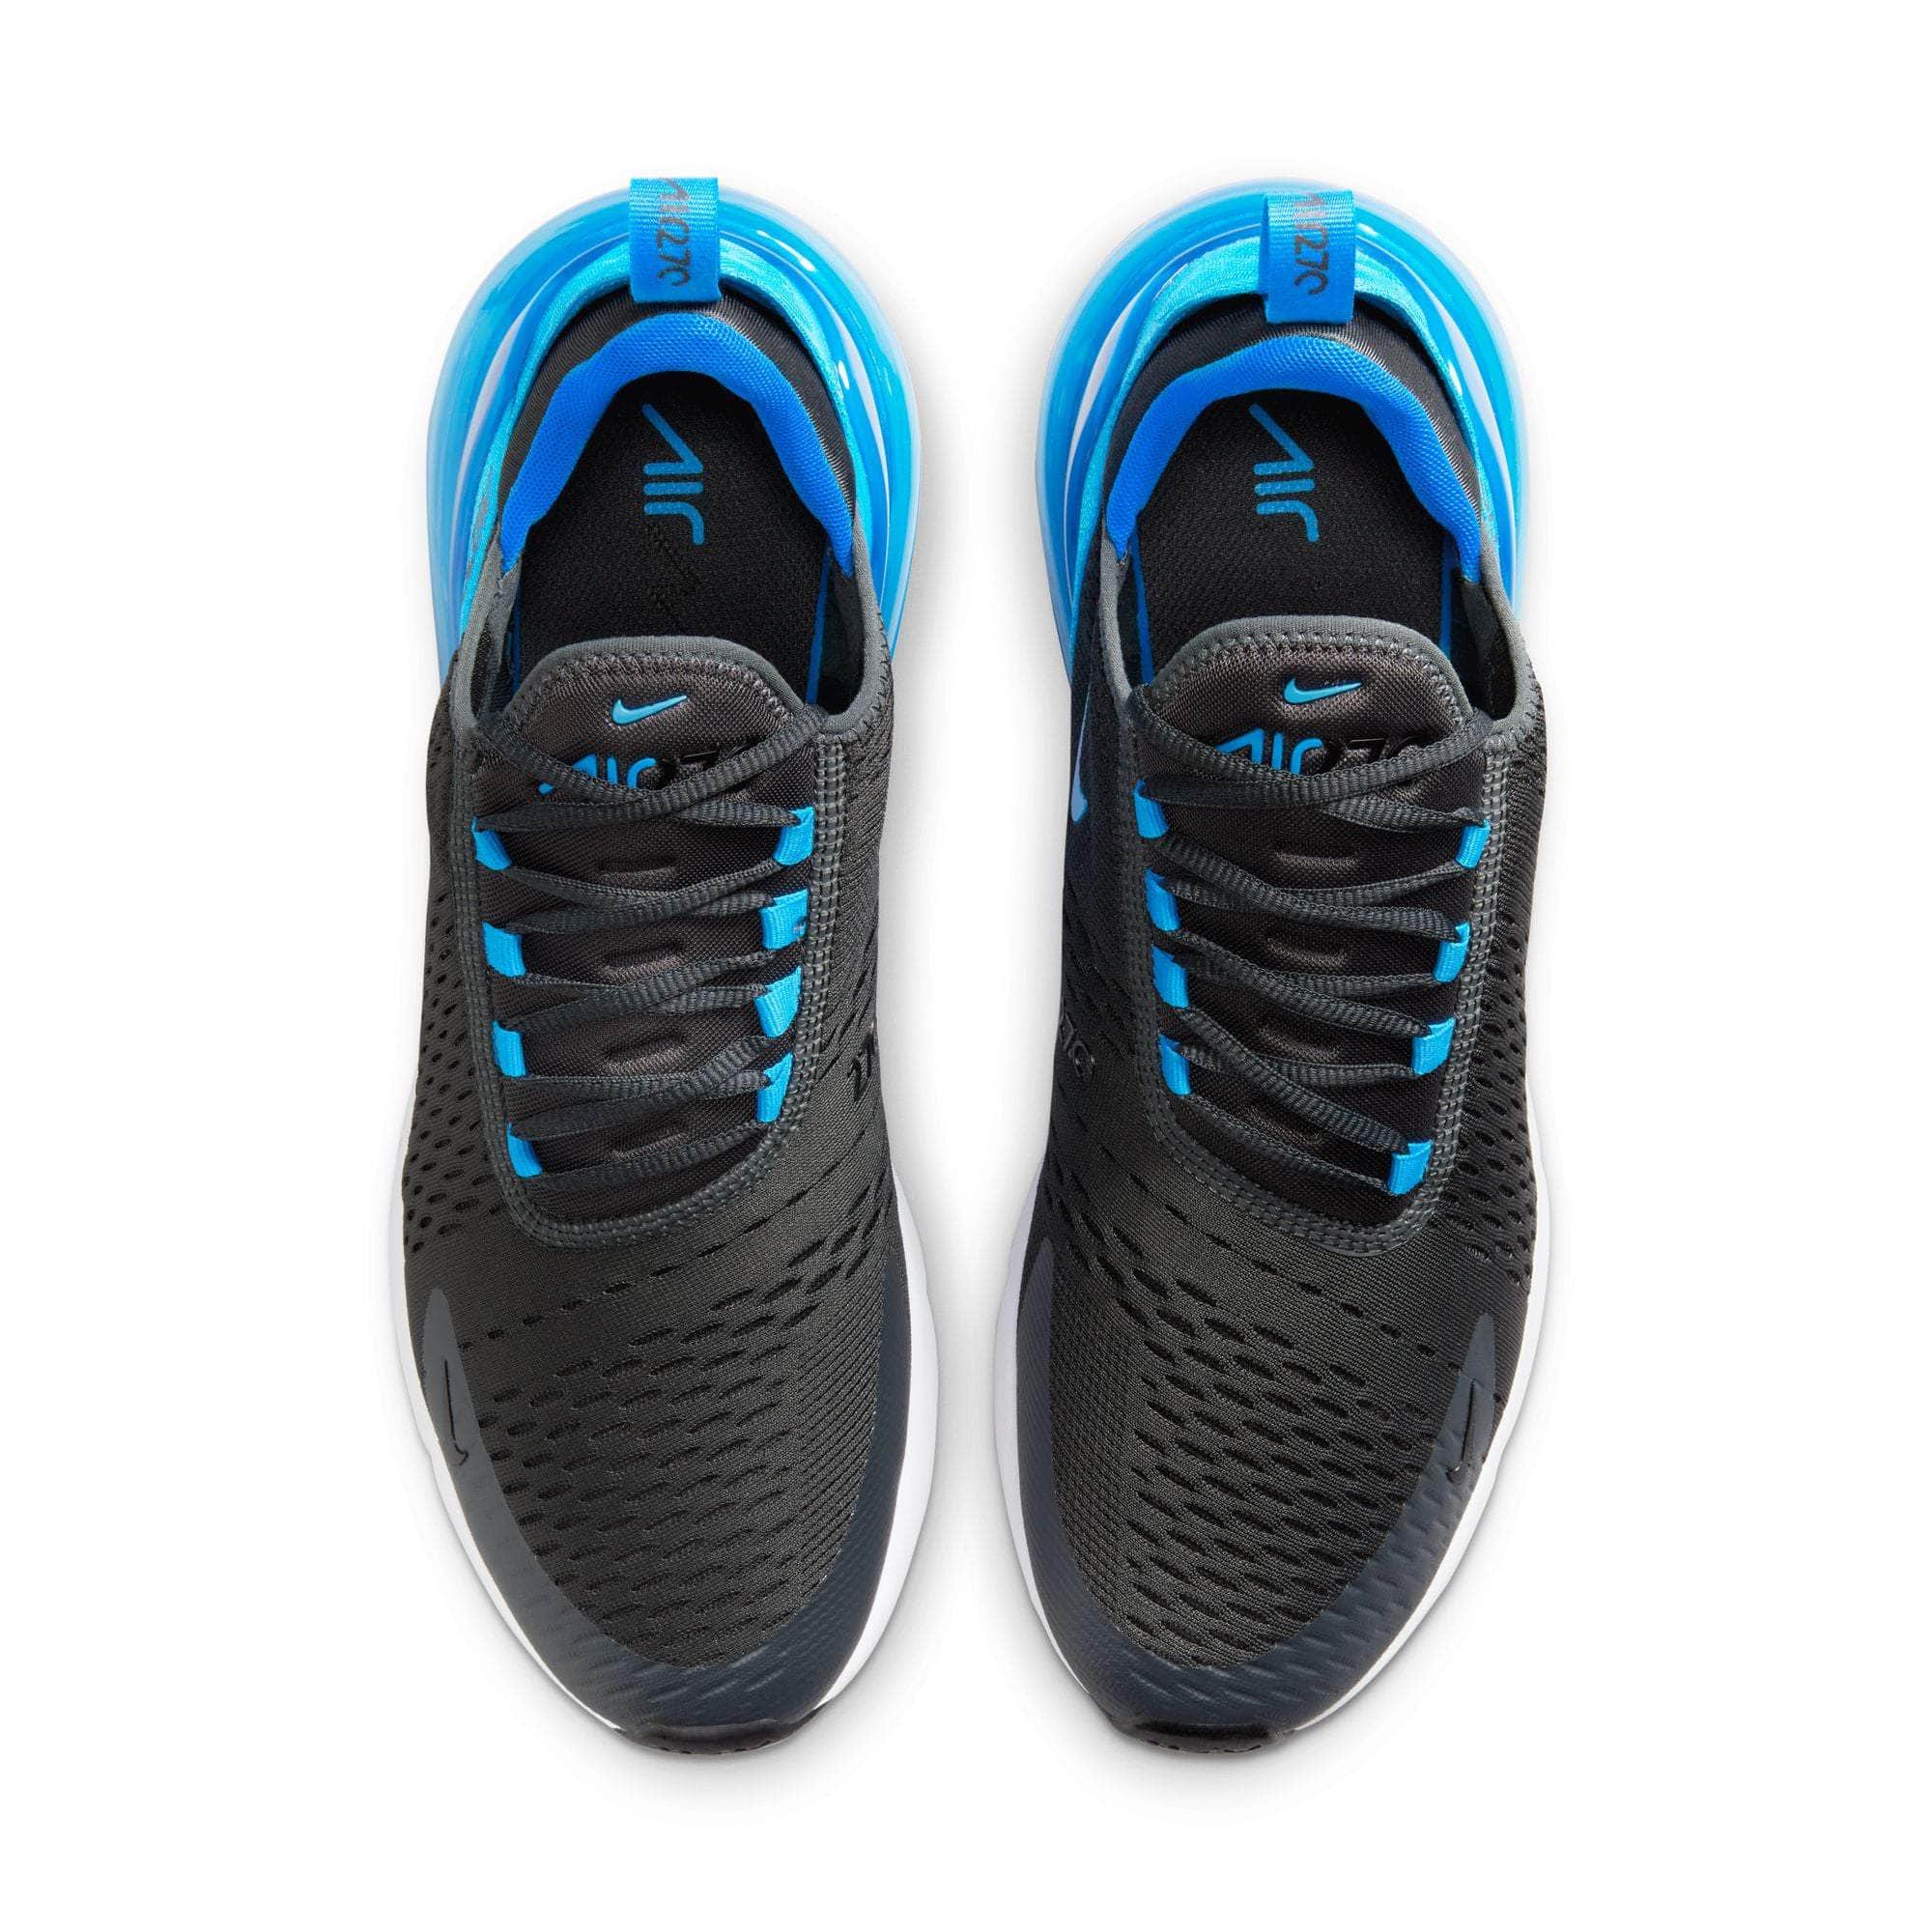 Nike Footwear Nike Air Max 270 "Anthracite Photo Blue" - Men's